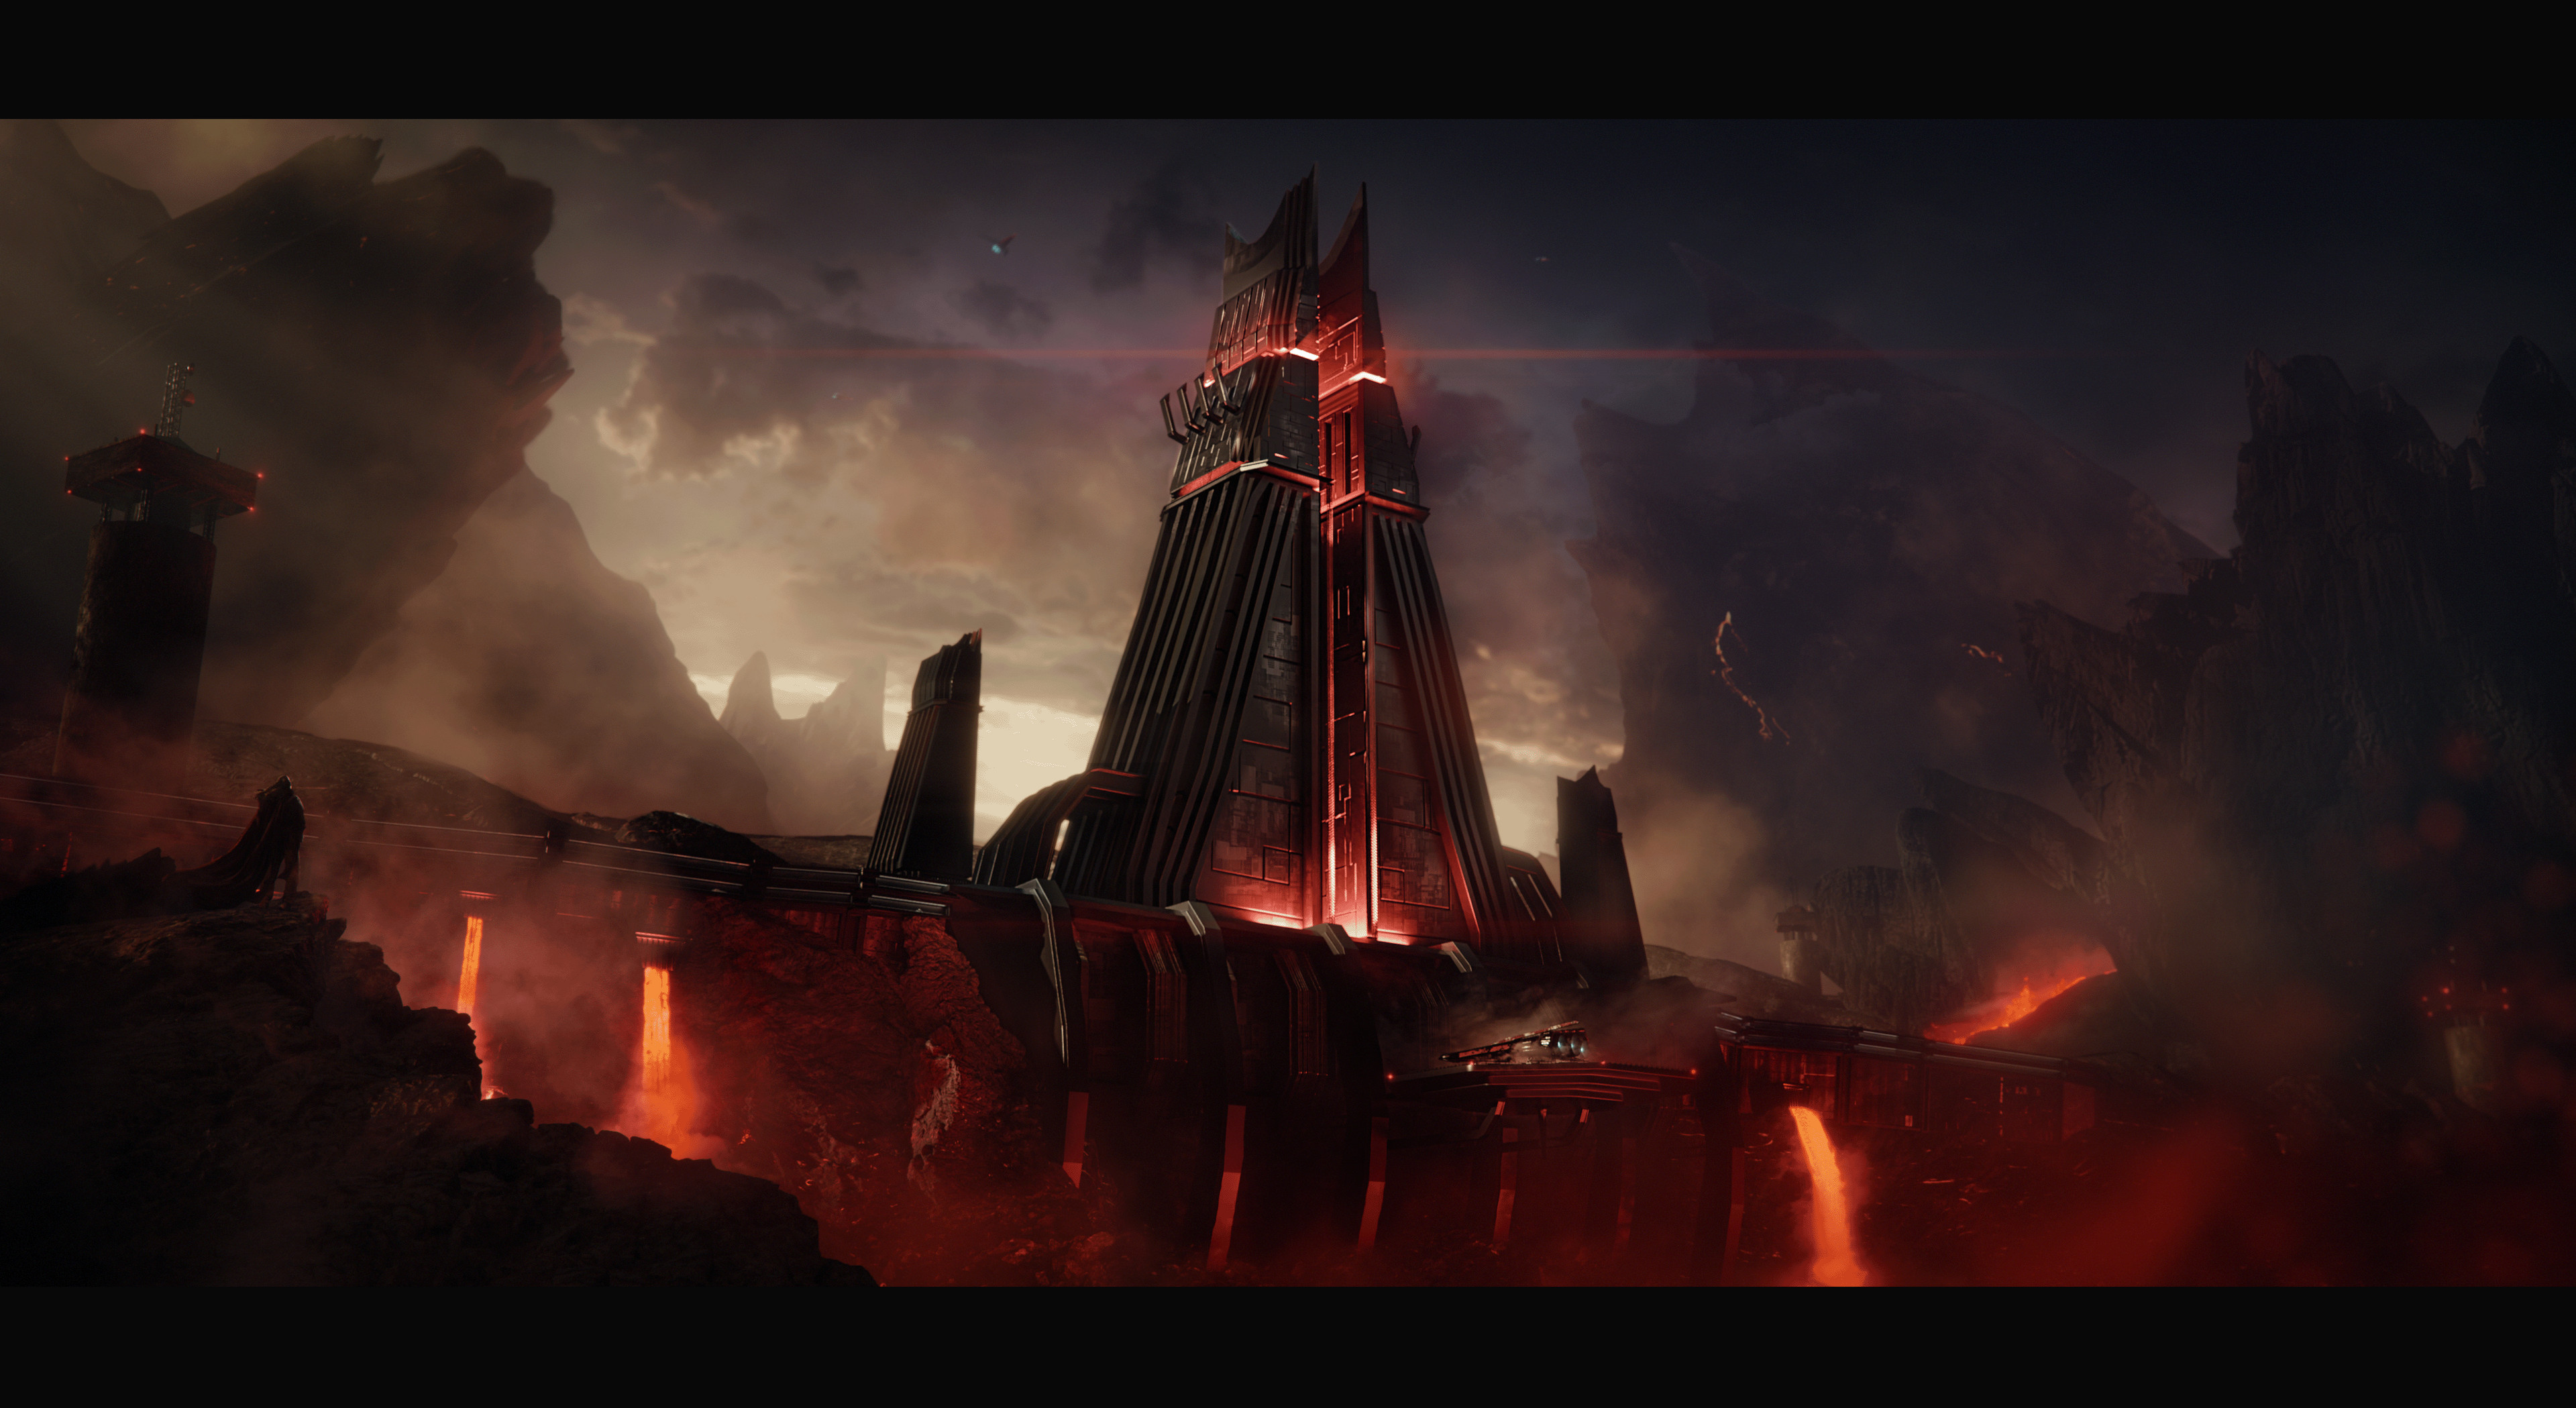 Science Fiction Science Lava Red Orange Smoke Fire Black Sky Star Wars Fantasy Art Spaceship 3840x2099